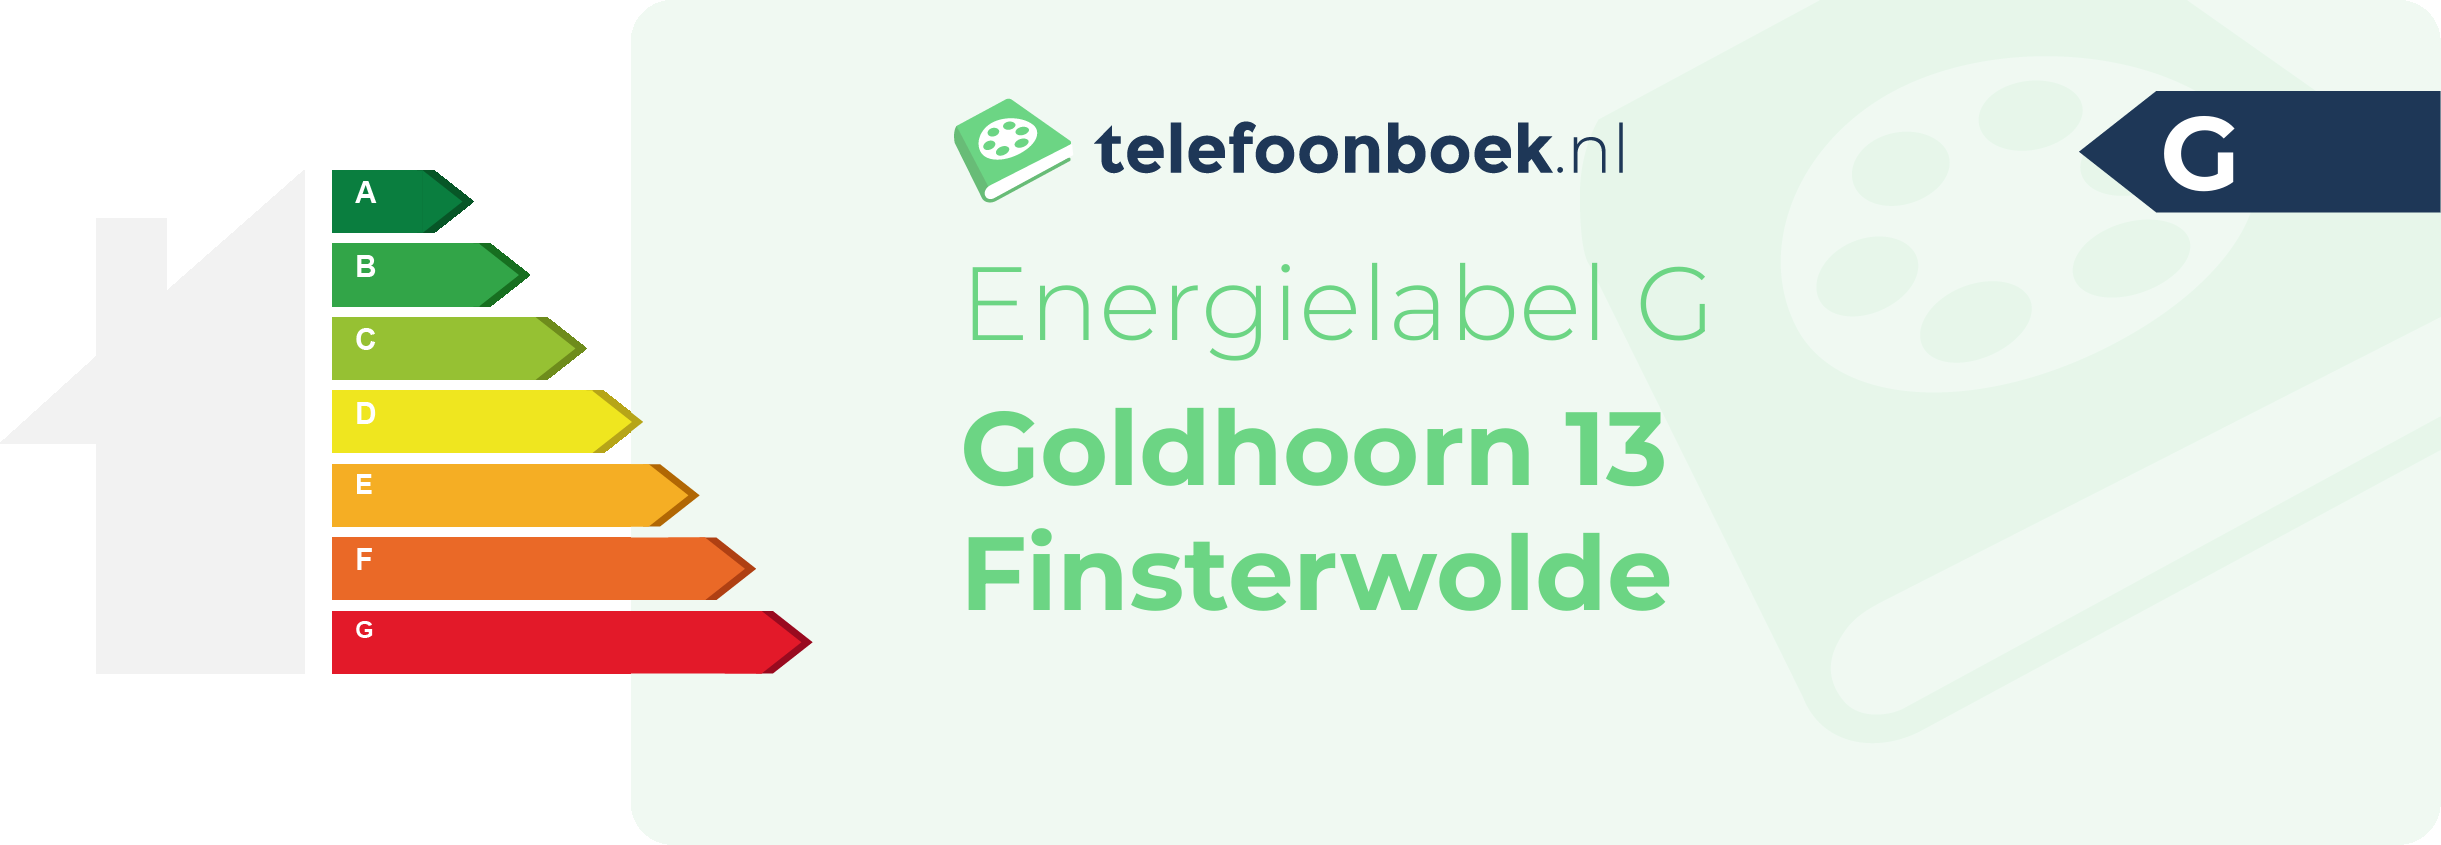 Energielabel Goldhoorn 13 Finsterwolde